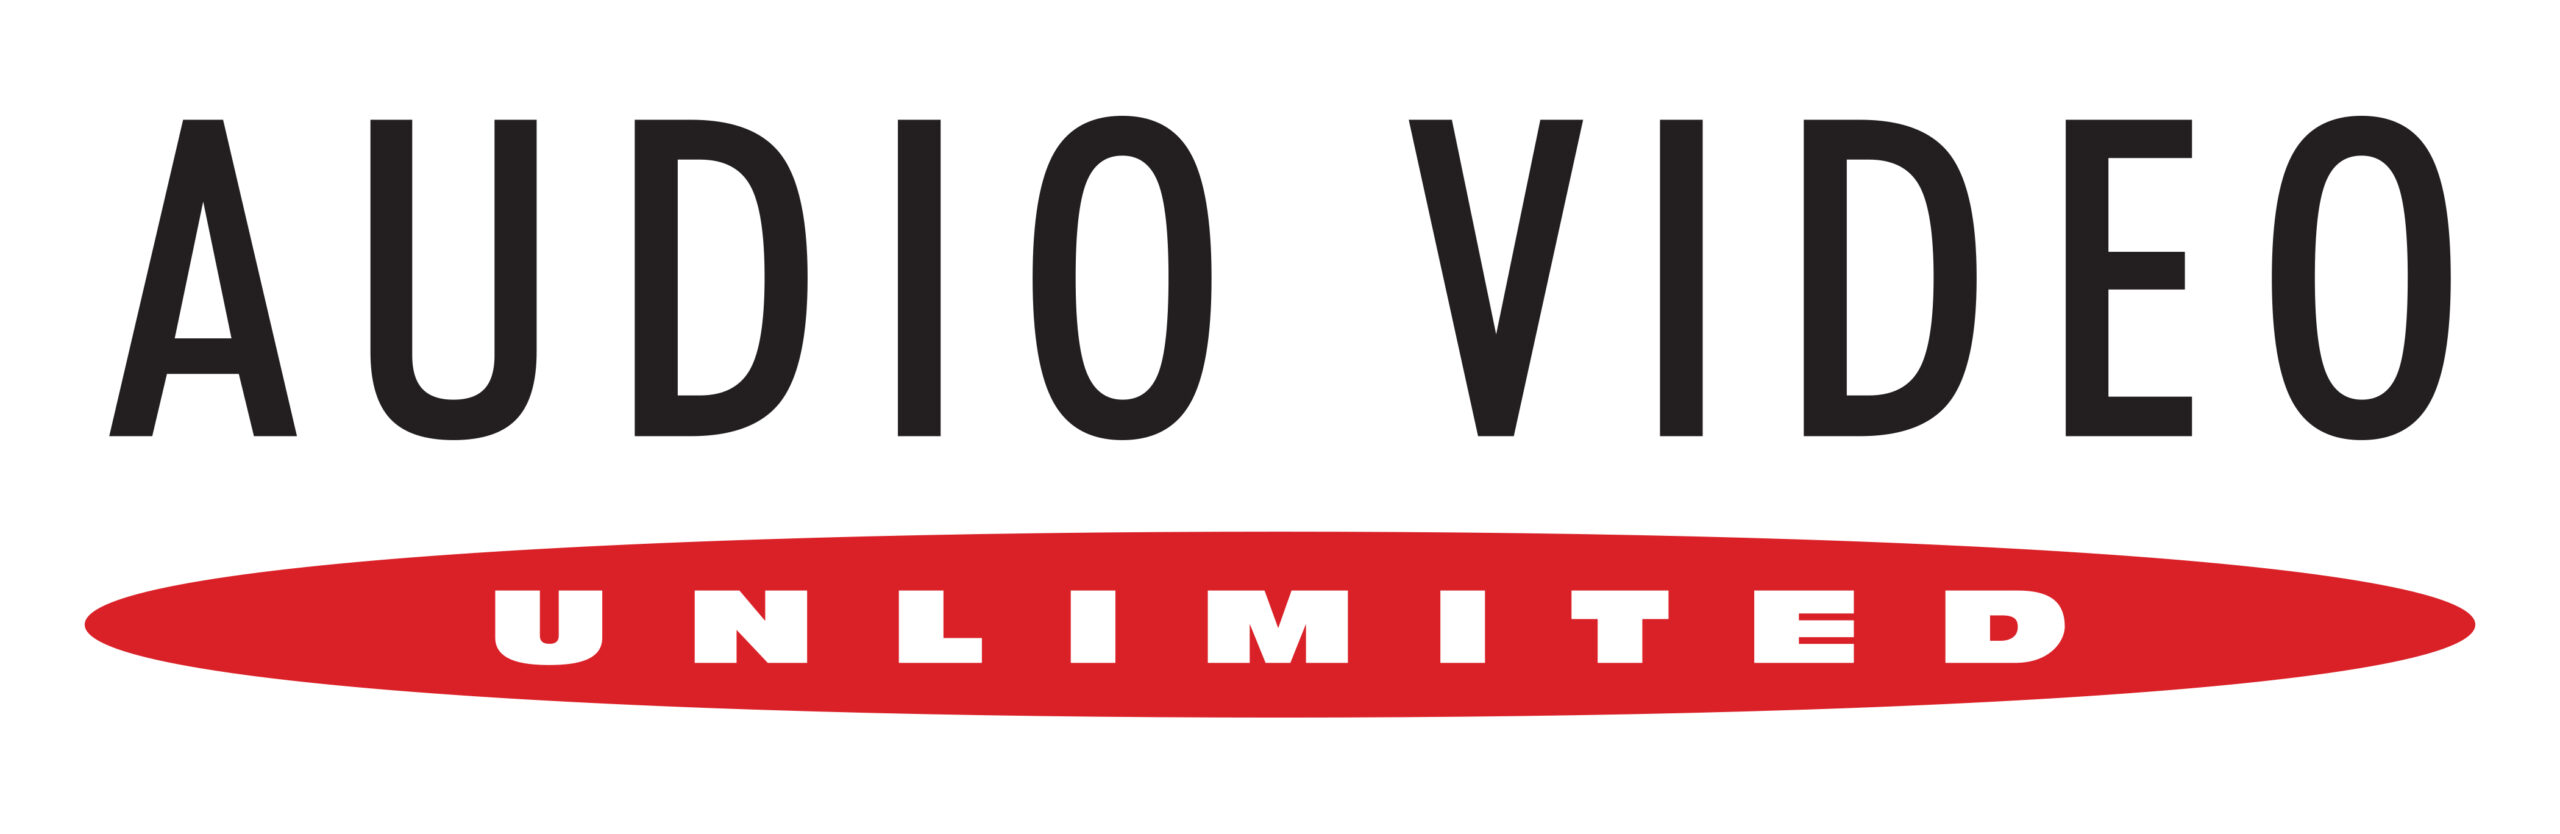 Audio Video Unlimited Logo